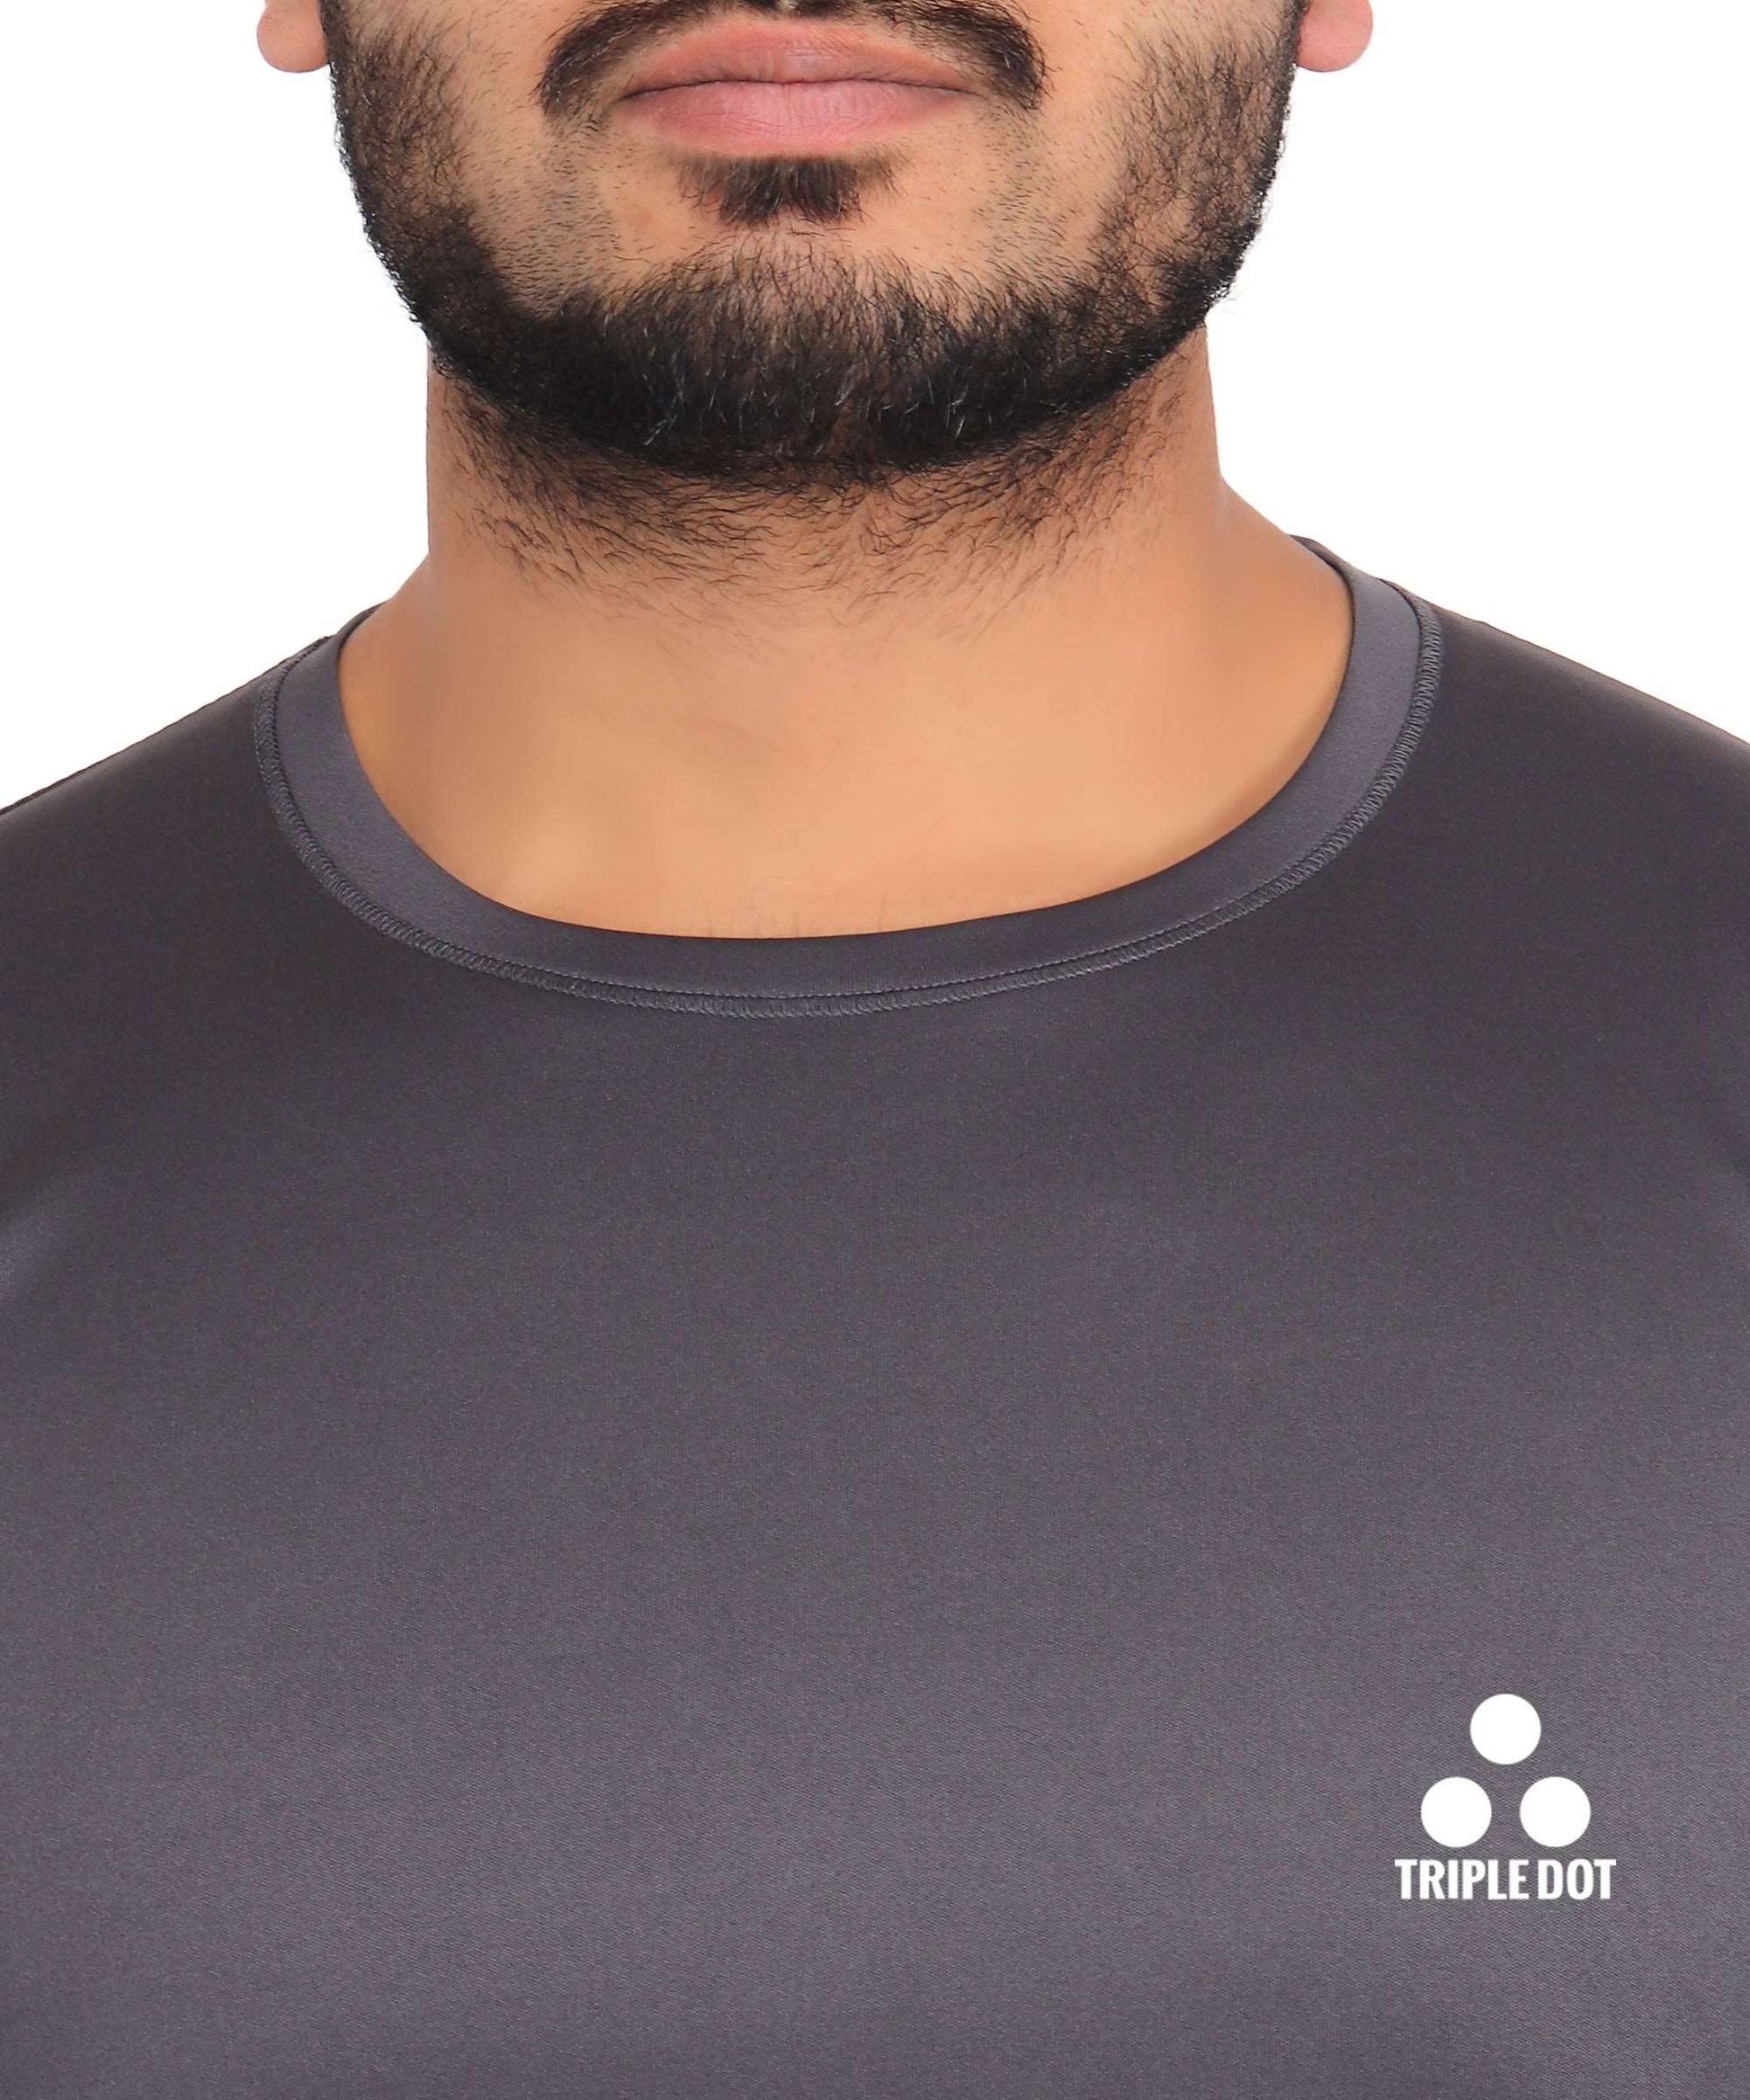 Triple Dot Dark Grey Polyester Round Neck Sport T shirt for Men